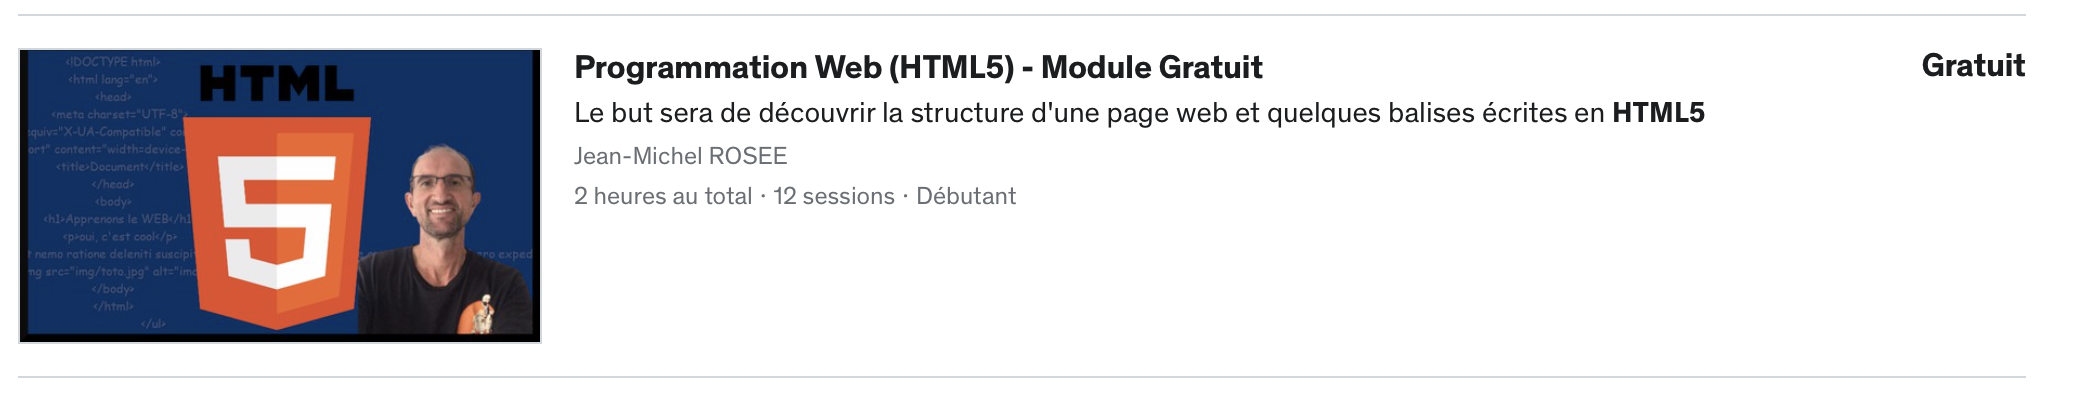 Programmation Web HTML5 Gratuit